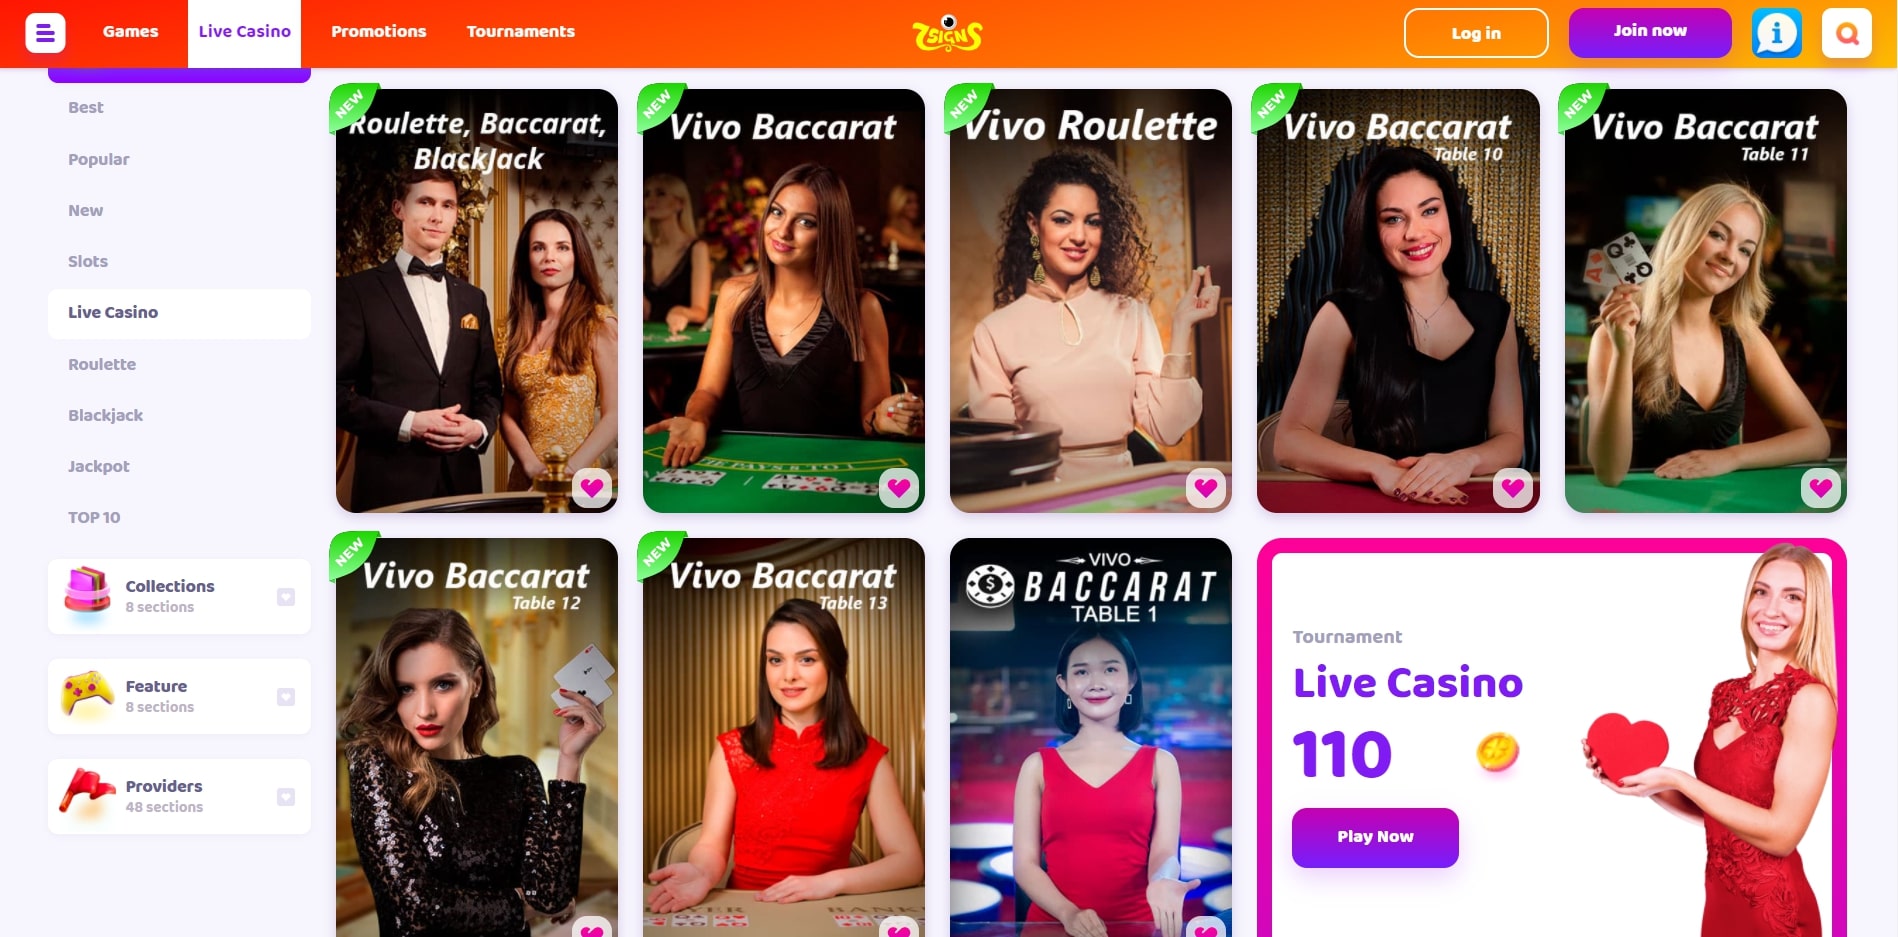 7 Signs Casino Live Dealer Games